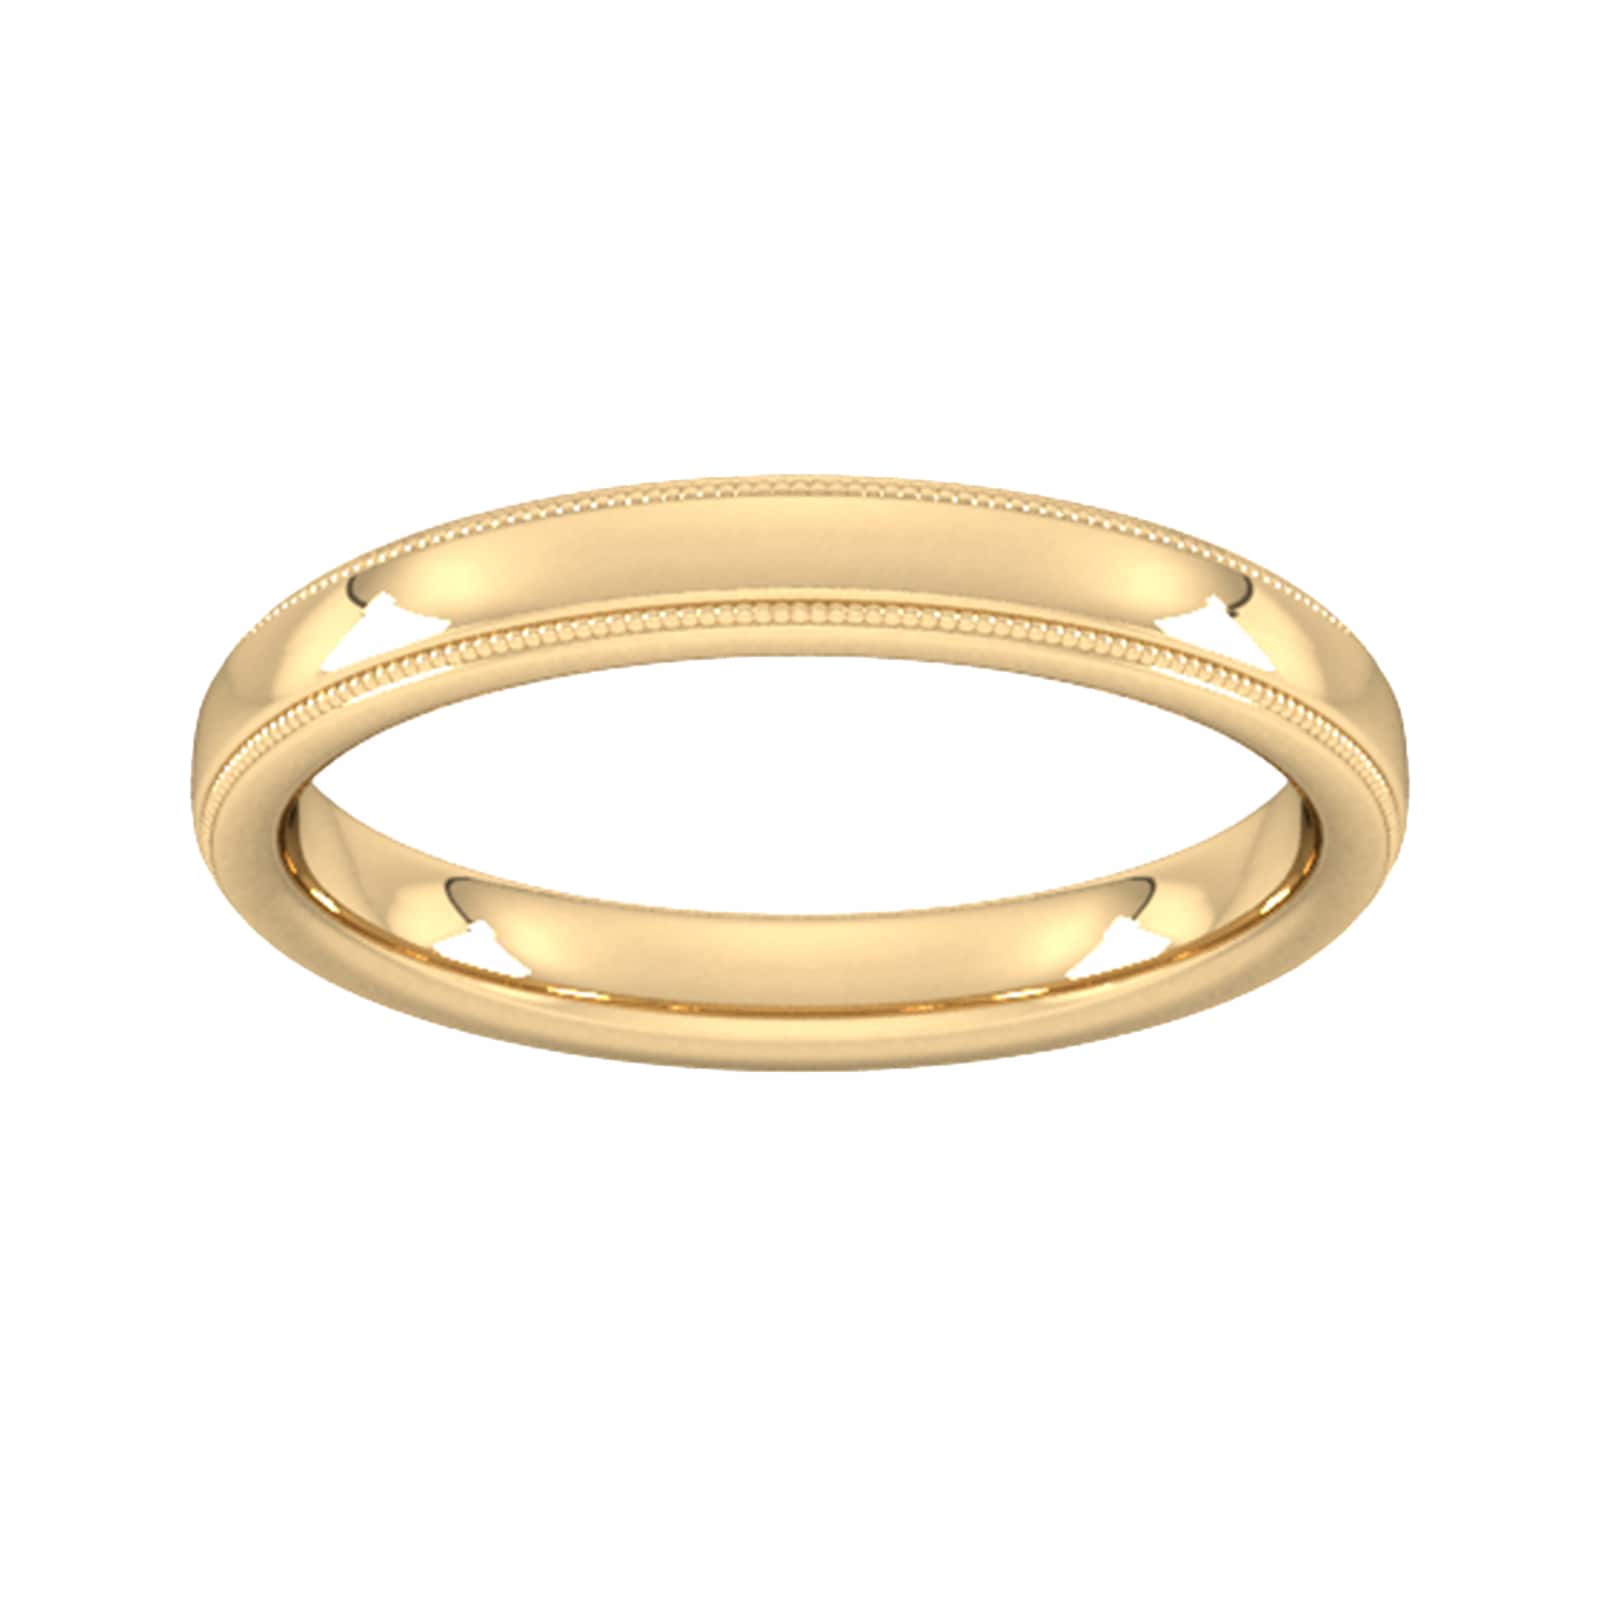 3mm Slight Court Standard Milgrain Edge Wedding Ring In 18 Carat Yellow Gold - Ring Size Q